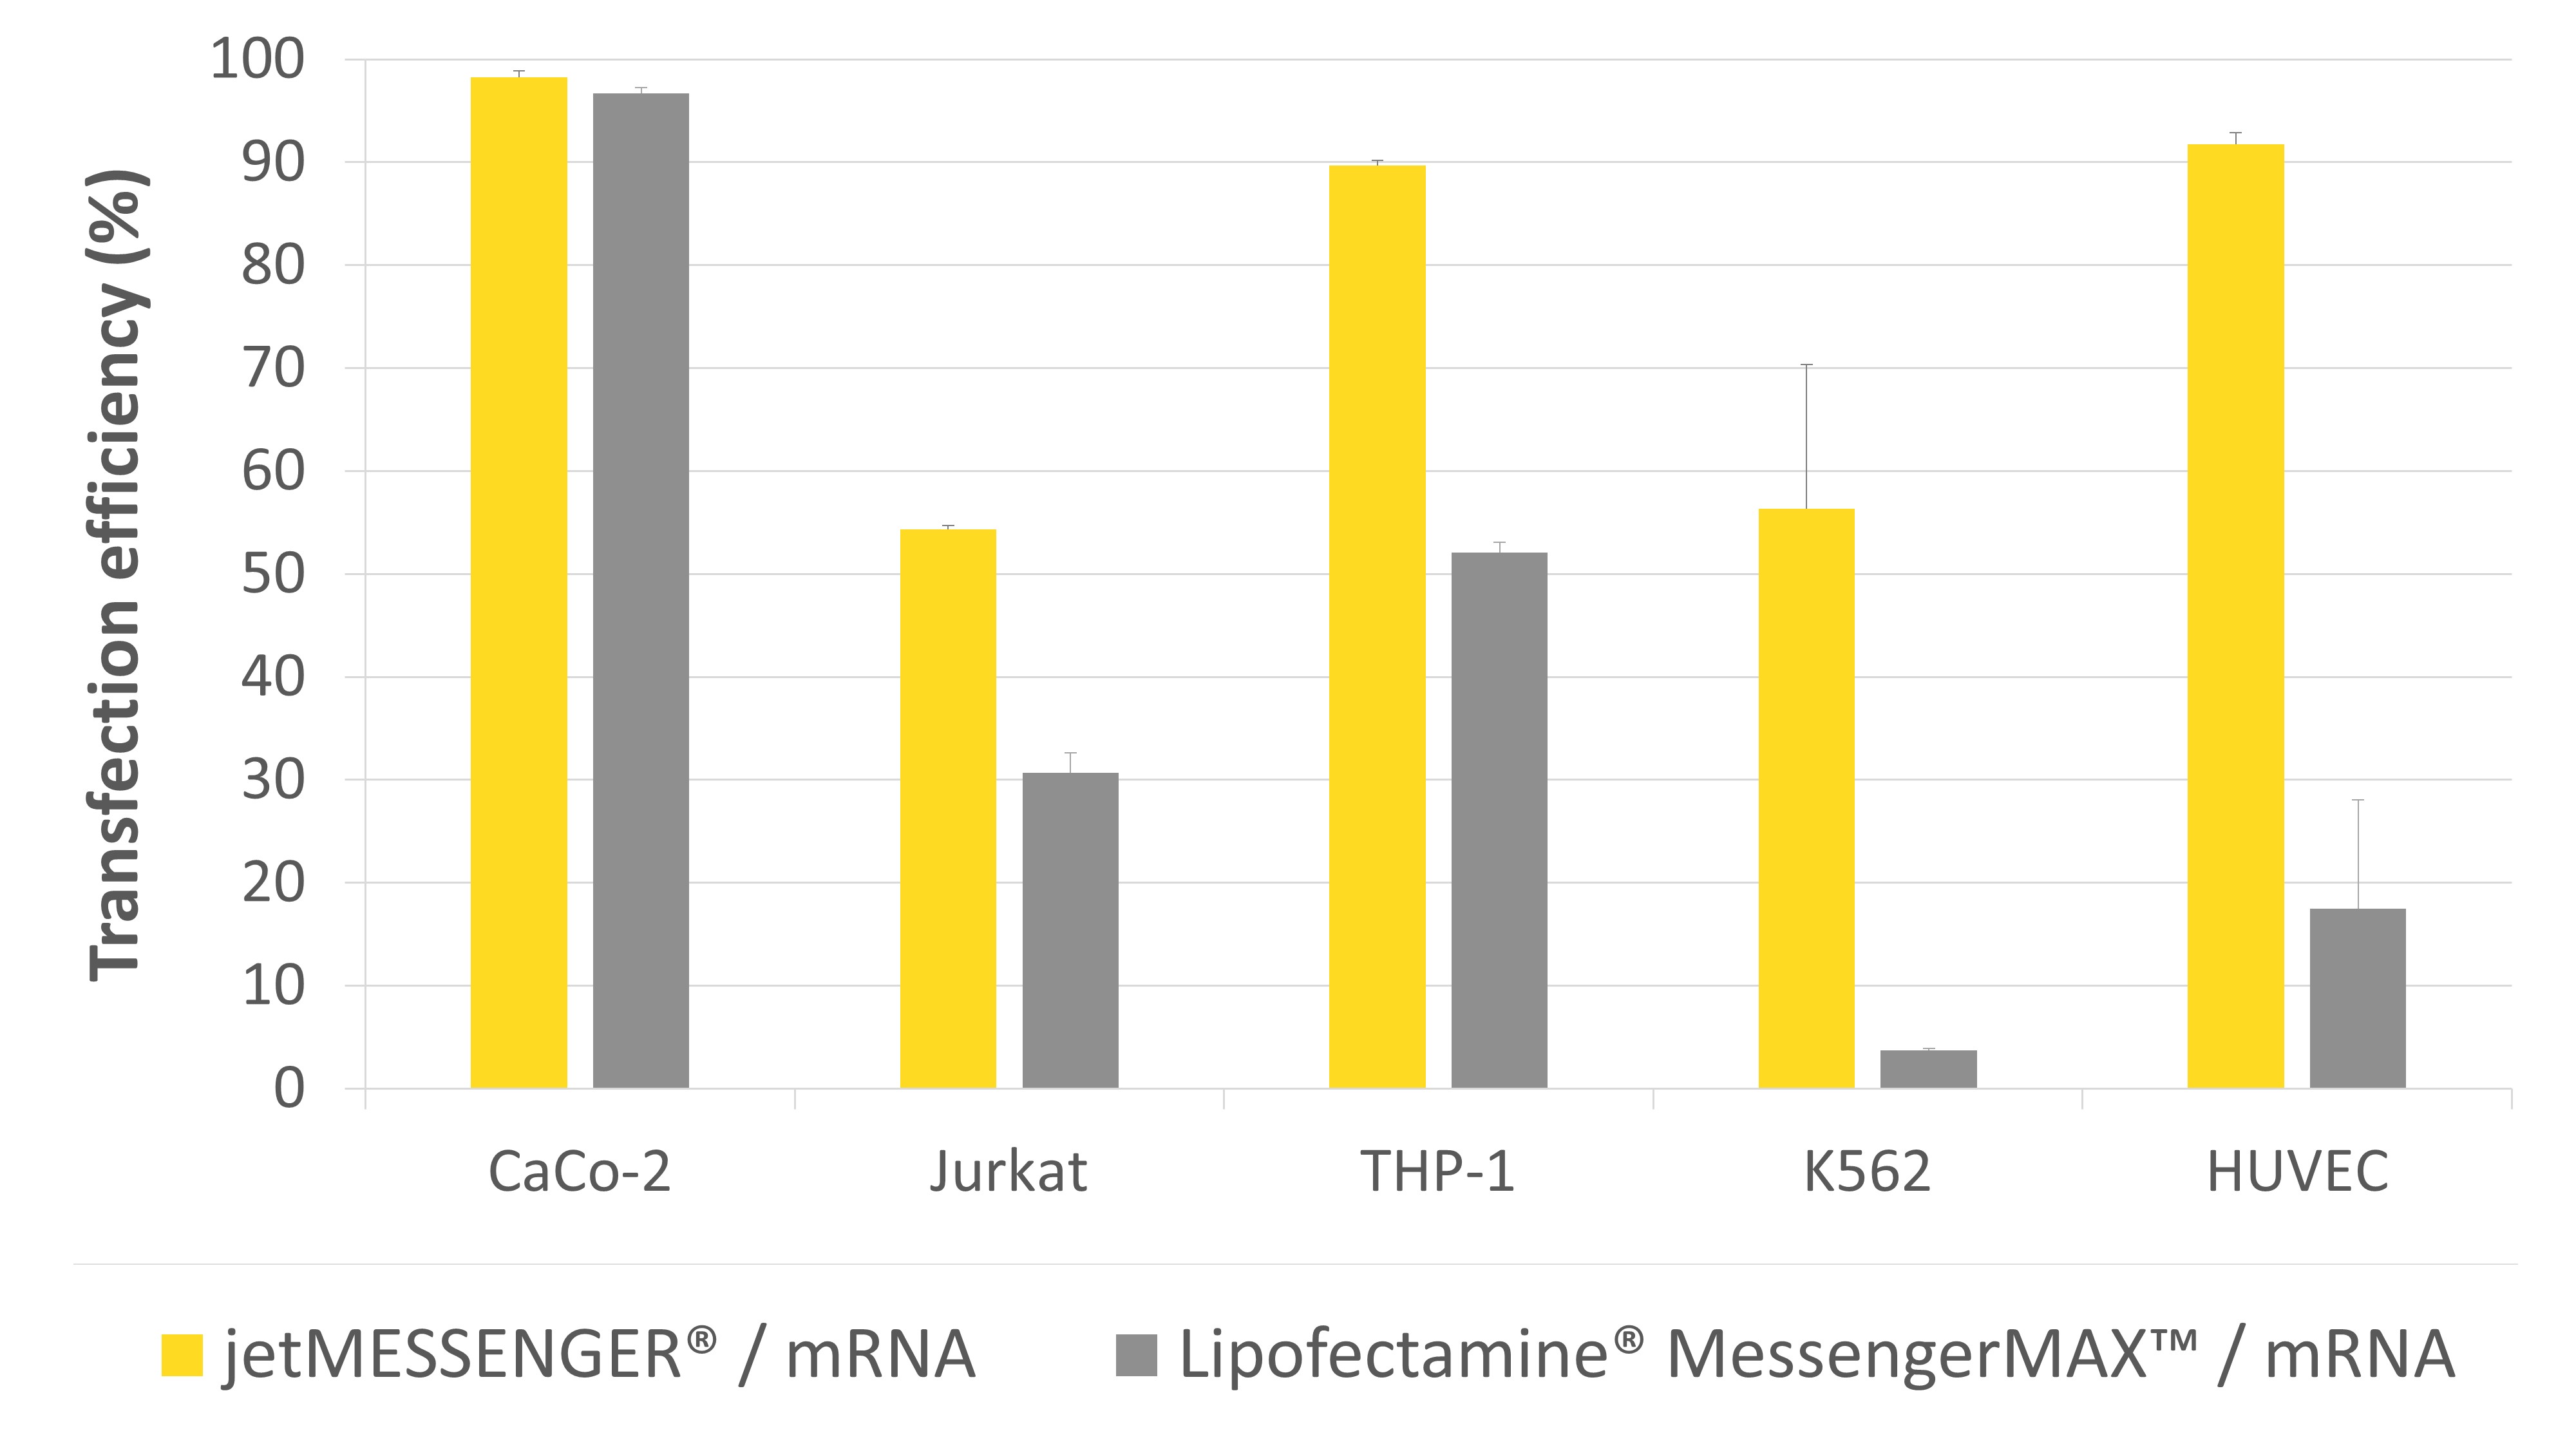 jetMESSENGER - Comparison versus Lipofectamine MessengerMAX